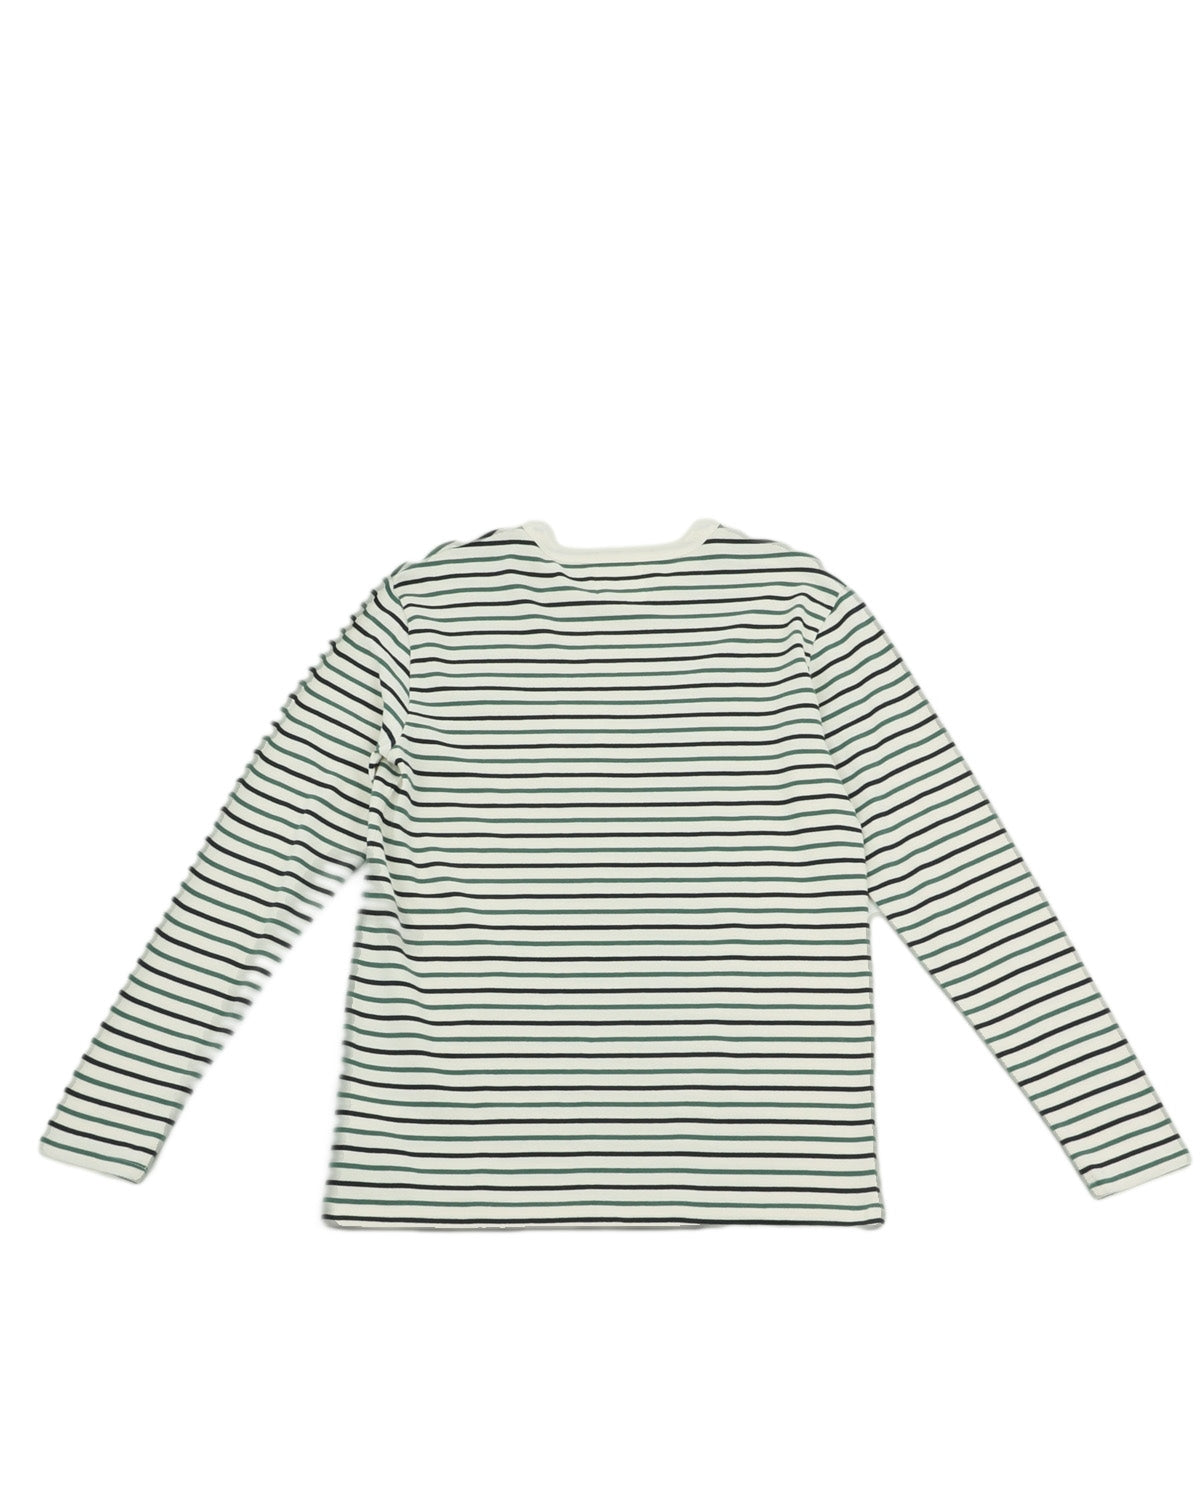 wood wood mel stripe ls t-shirt_off white green stripes_2_3